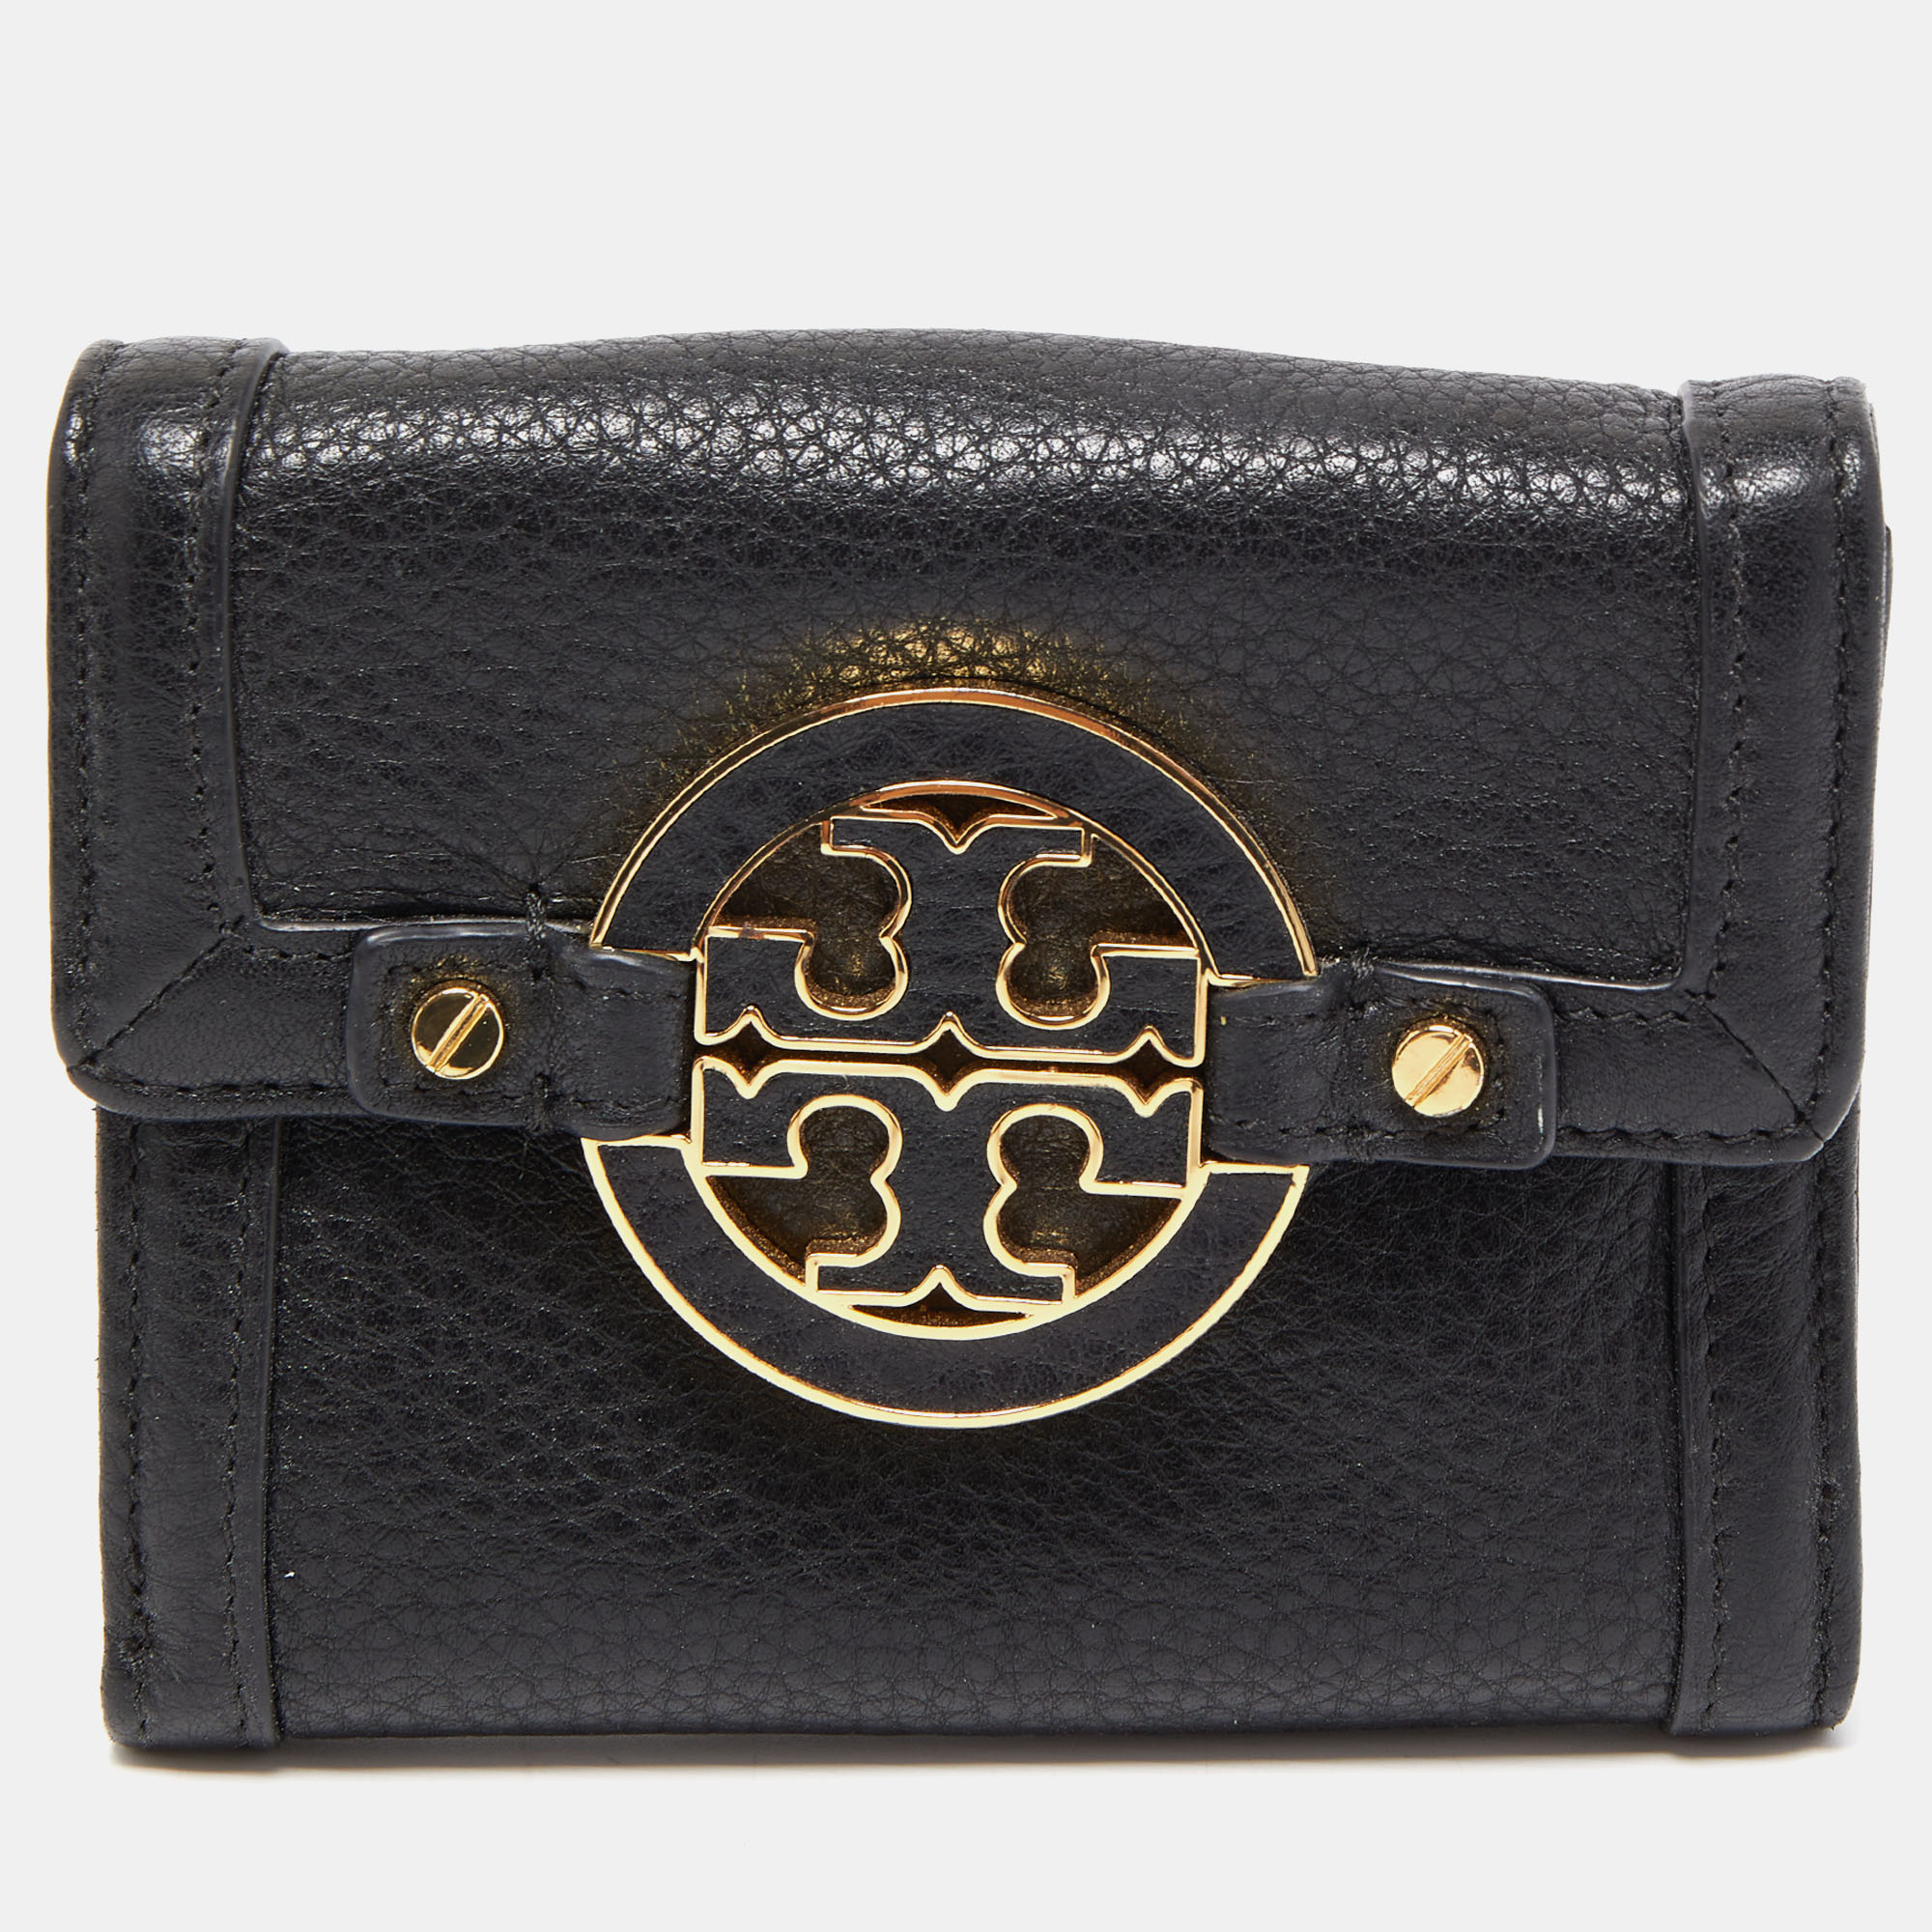 Tory Burch Black Leather Amanda Compact Wallet Tory Burch | TLC